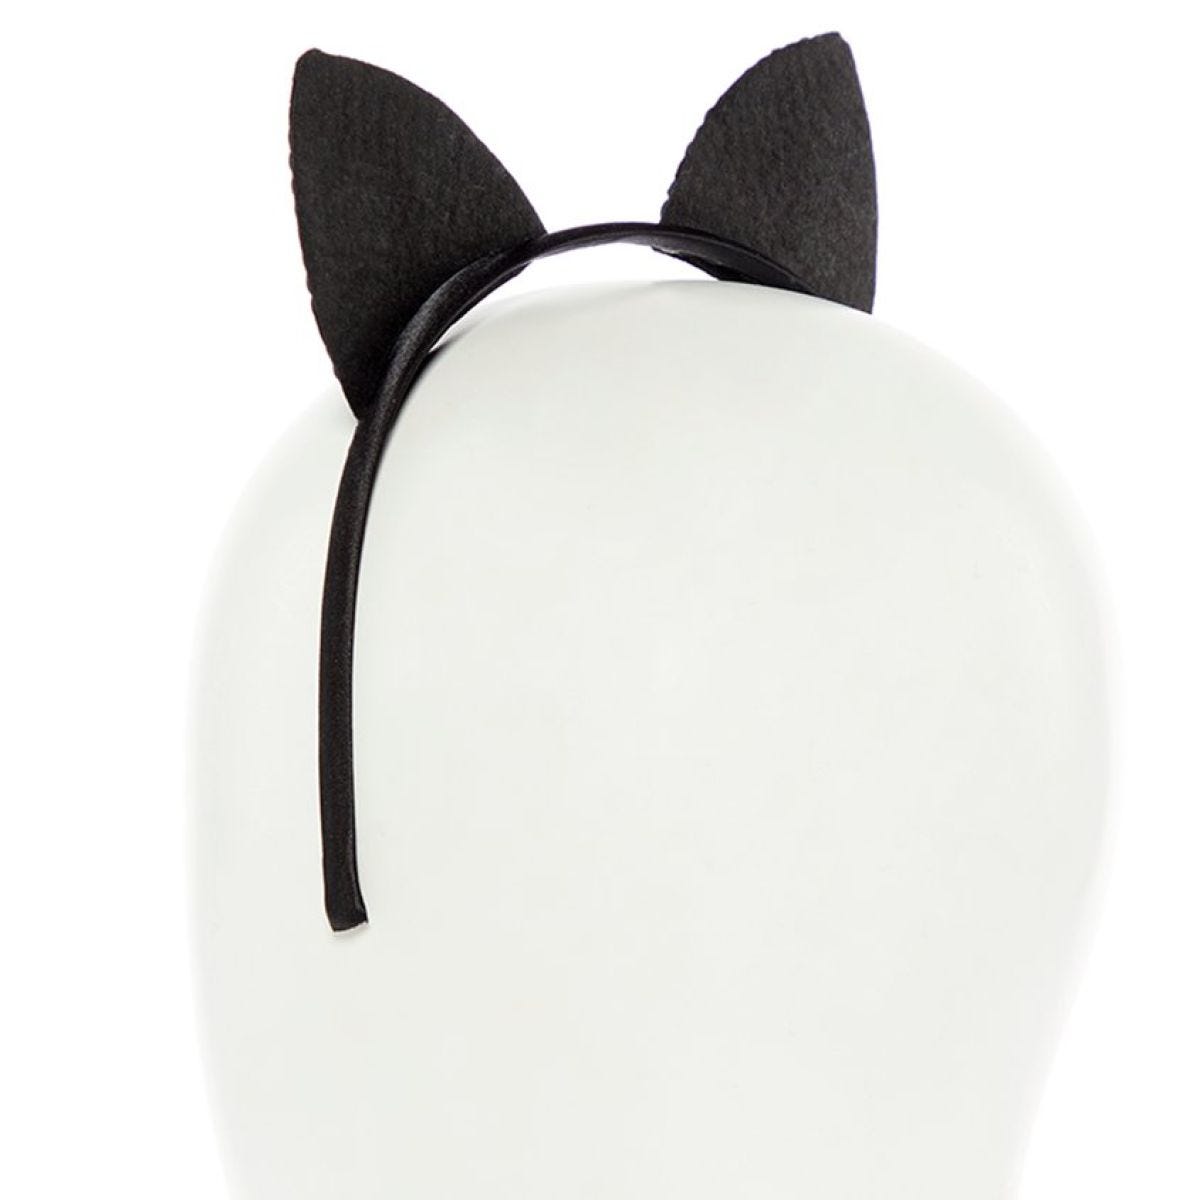 Black Sequin Cat Ears Headband